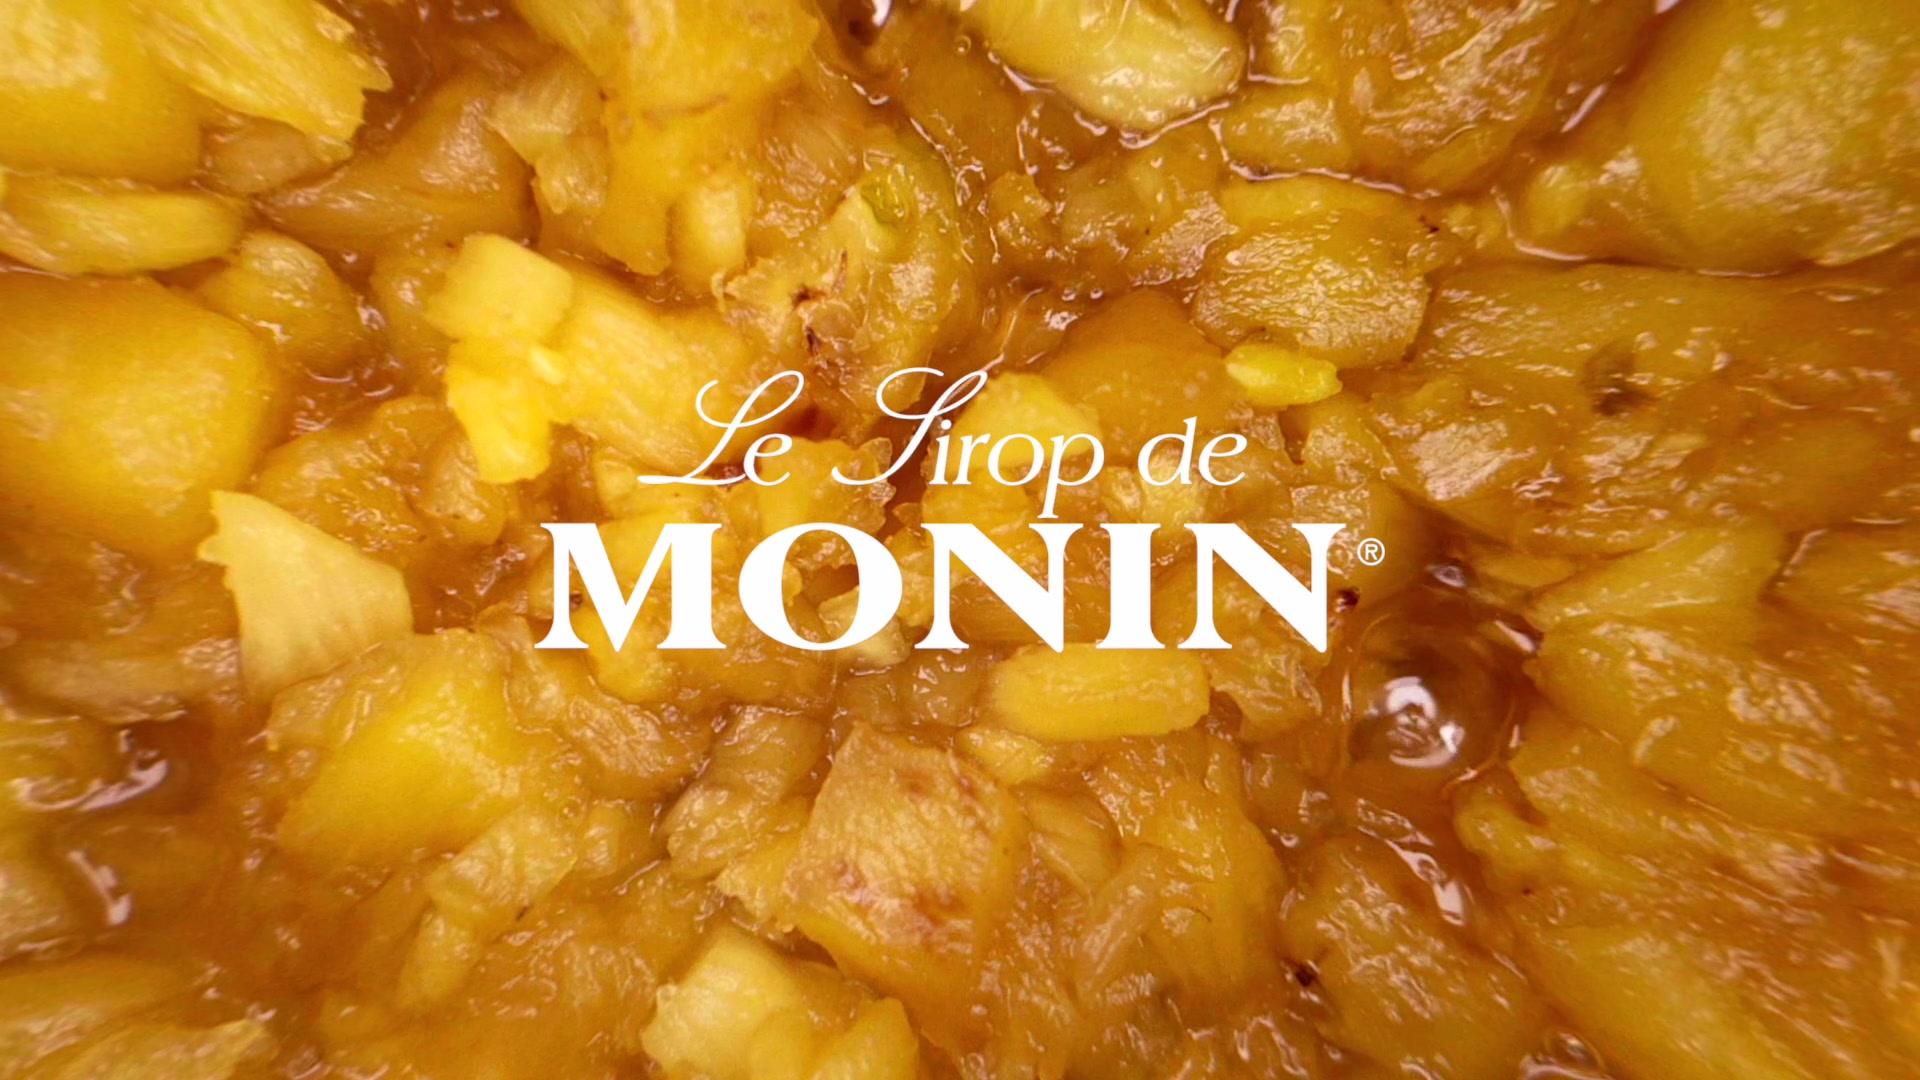 莫林 MONIN Pineapple Cake 广告